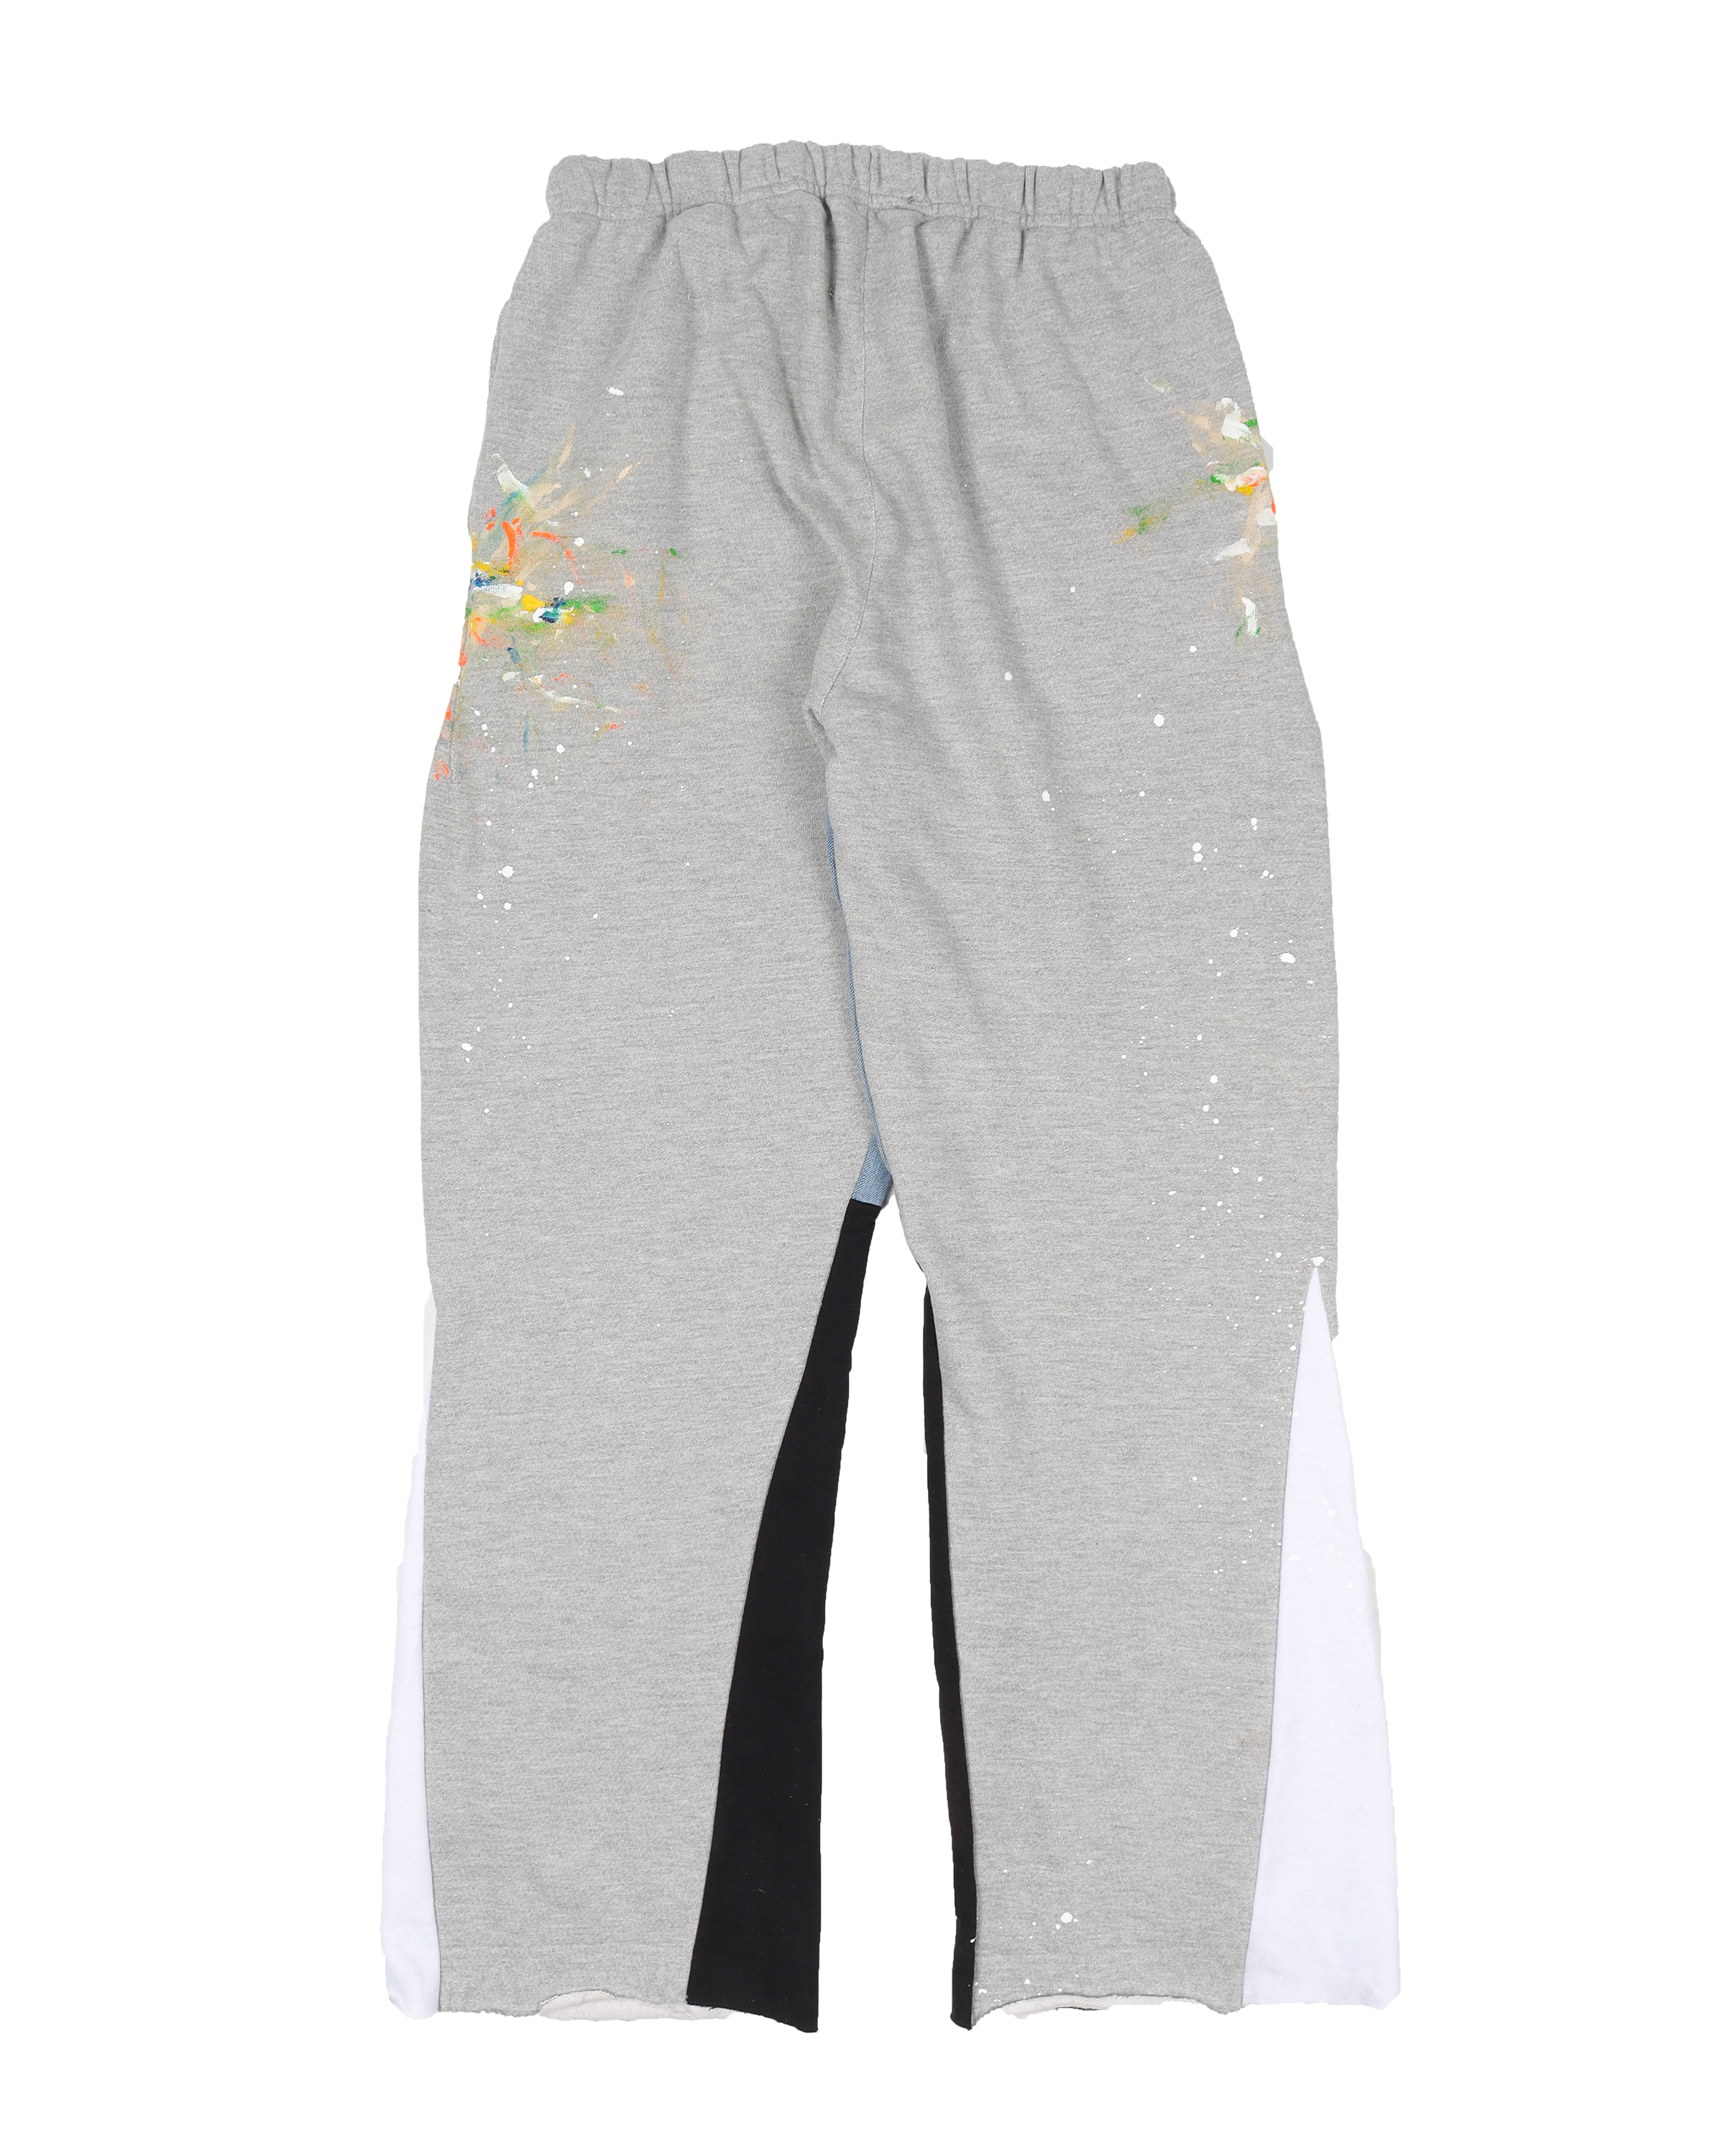 "LA FLARE" Painted Sweatpants